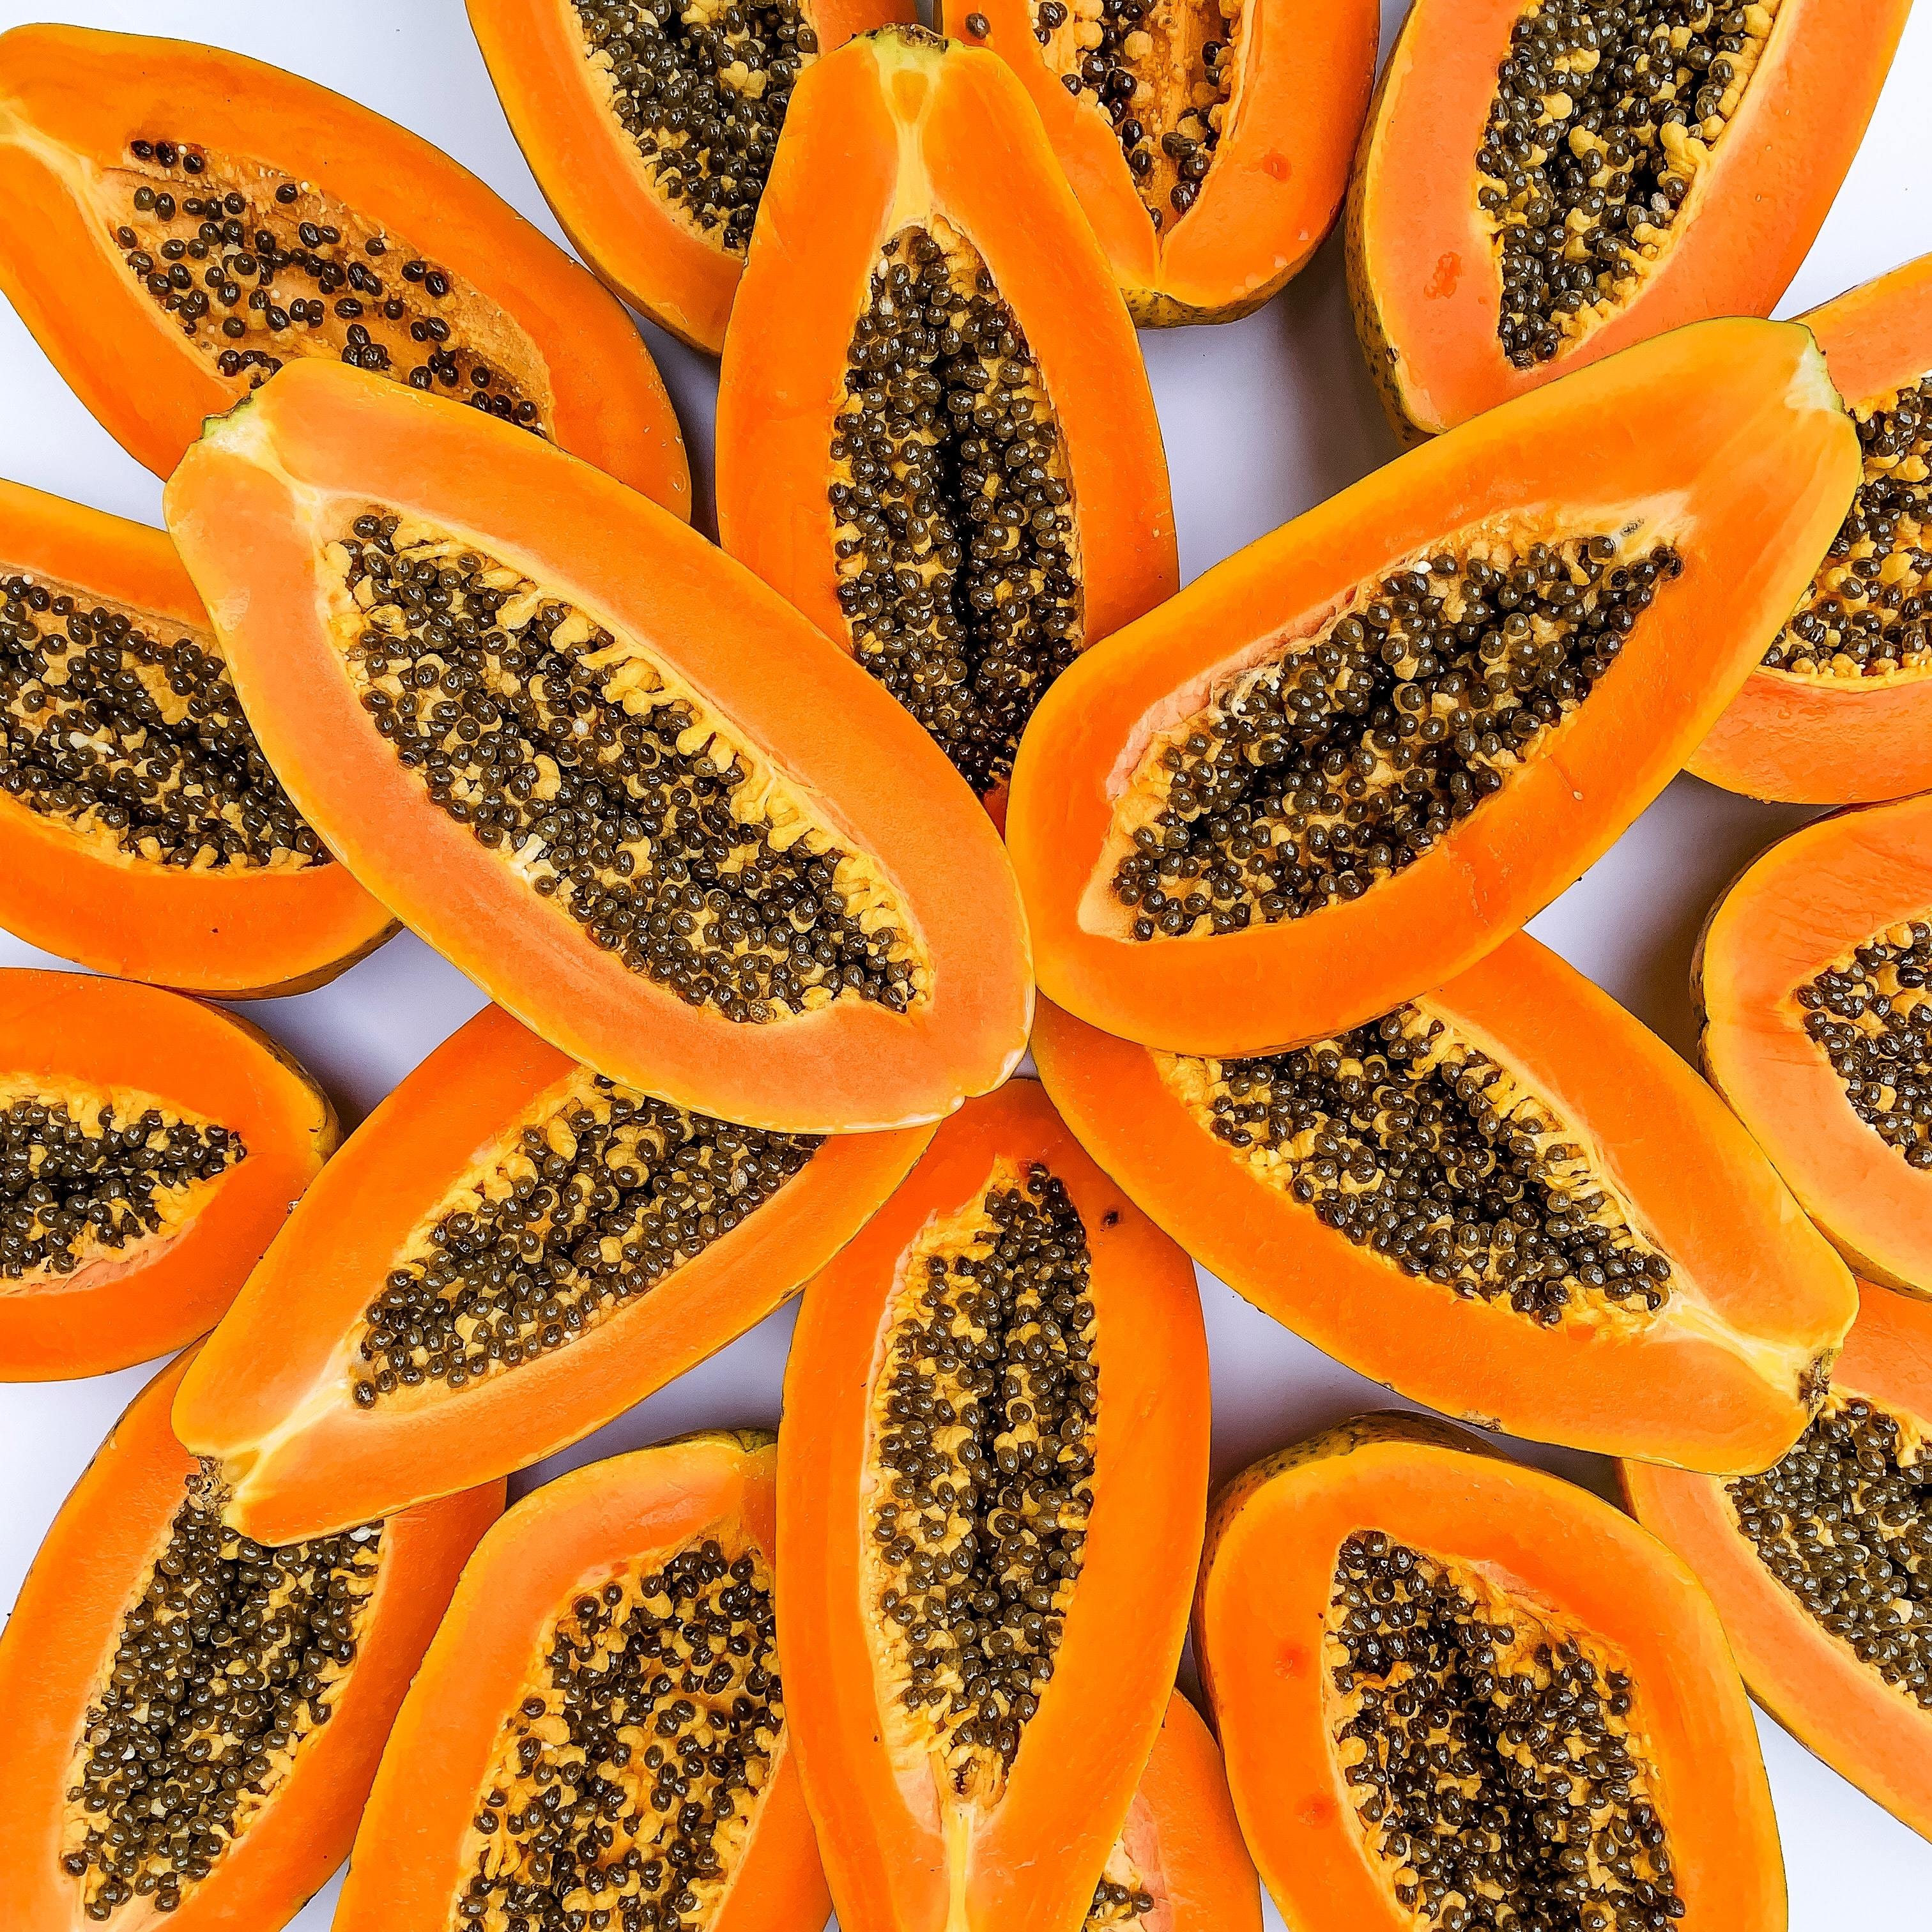 Papaya digestive enzymes